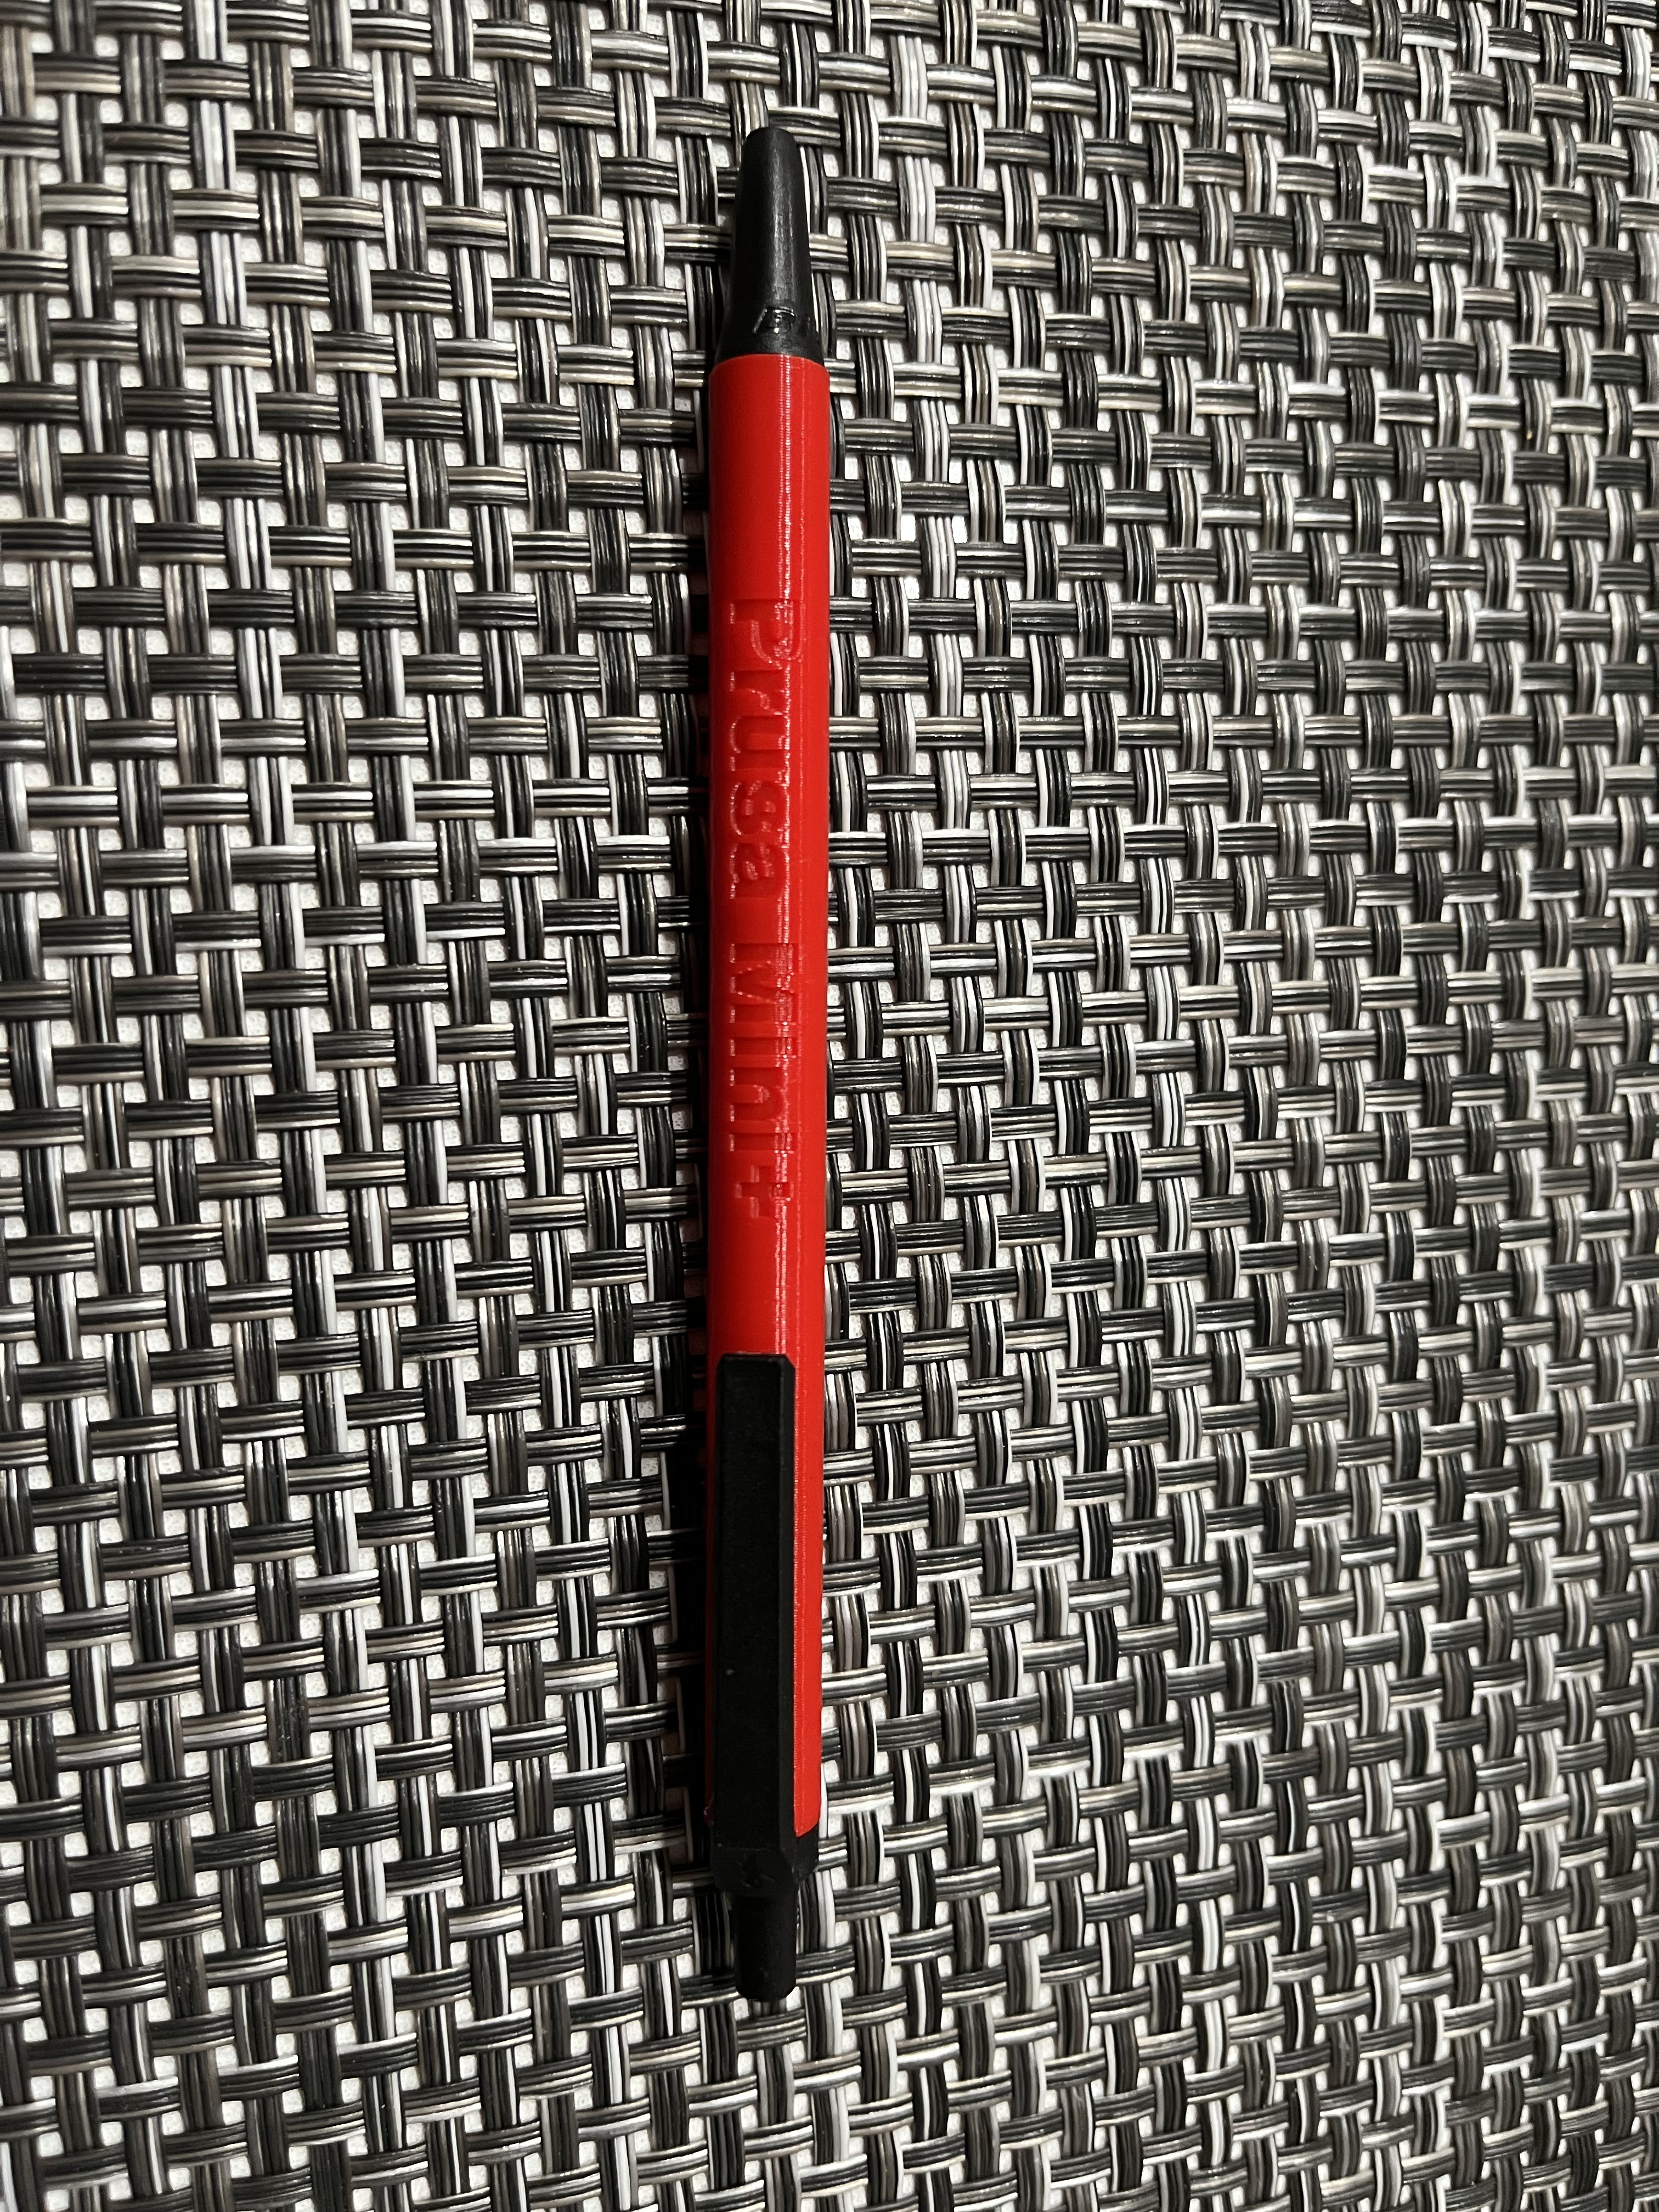 Prusa Mini+ (Bic Clic) Pen